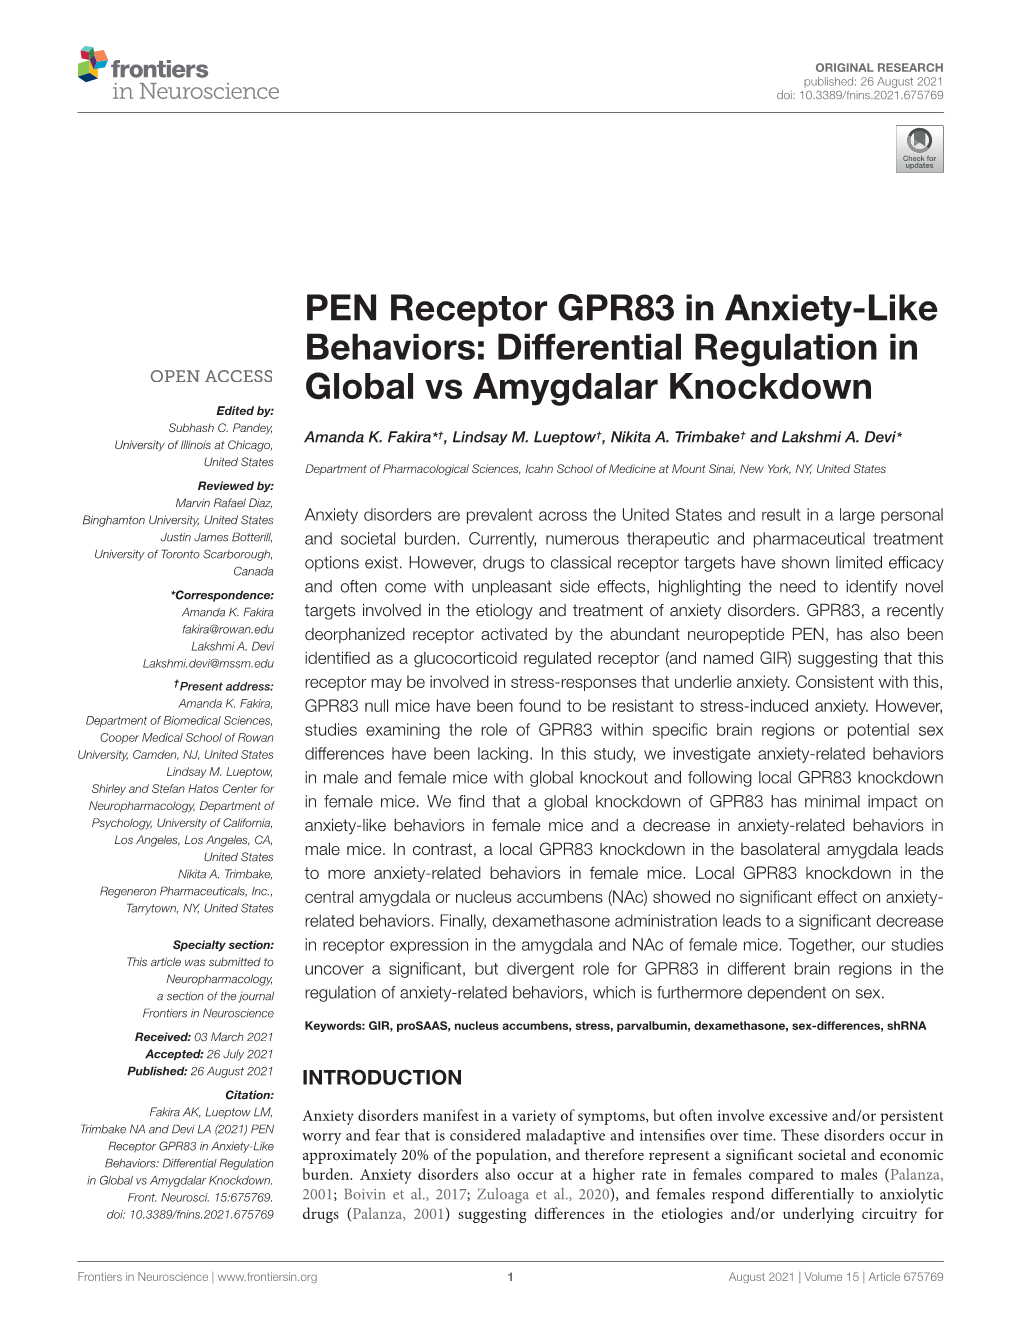 PEN Receptor GPR83 in Anxiety-Like Behaviors: Differential Regulation in Global Vs Amygdalar Knockdown Edited By: Subhash C